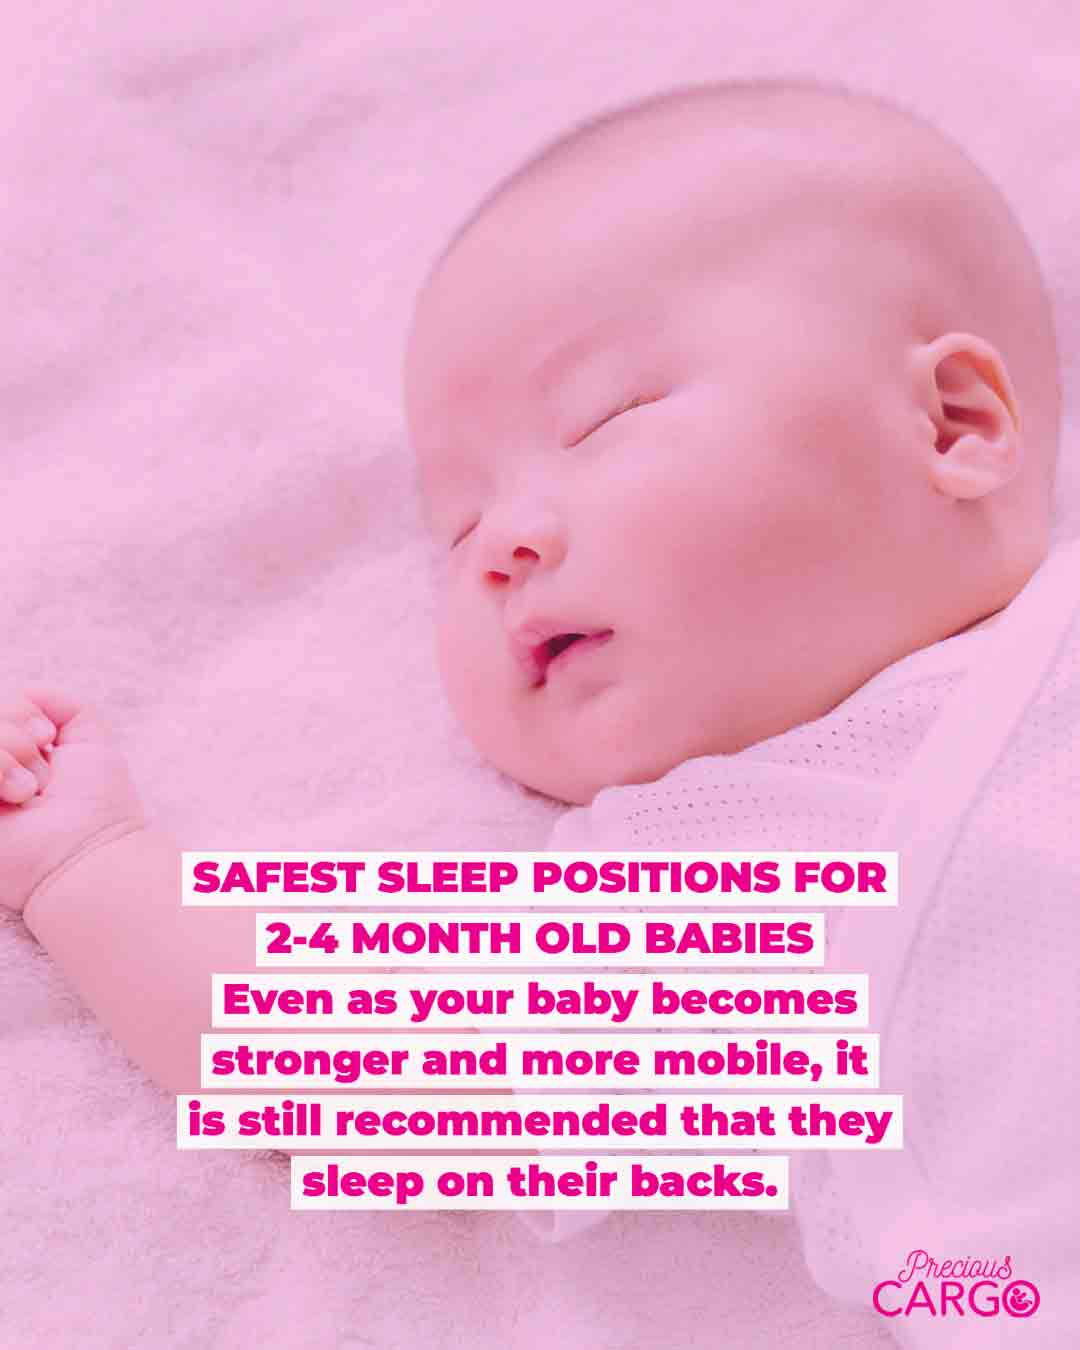 Safe sleep for babies 2-4 months old